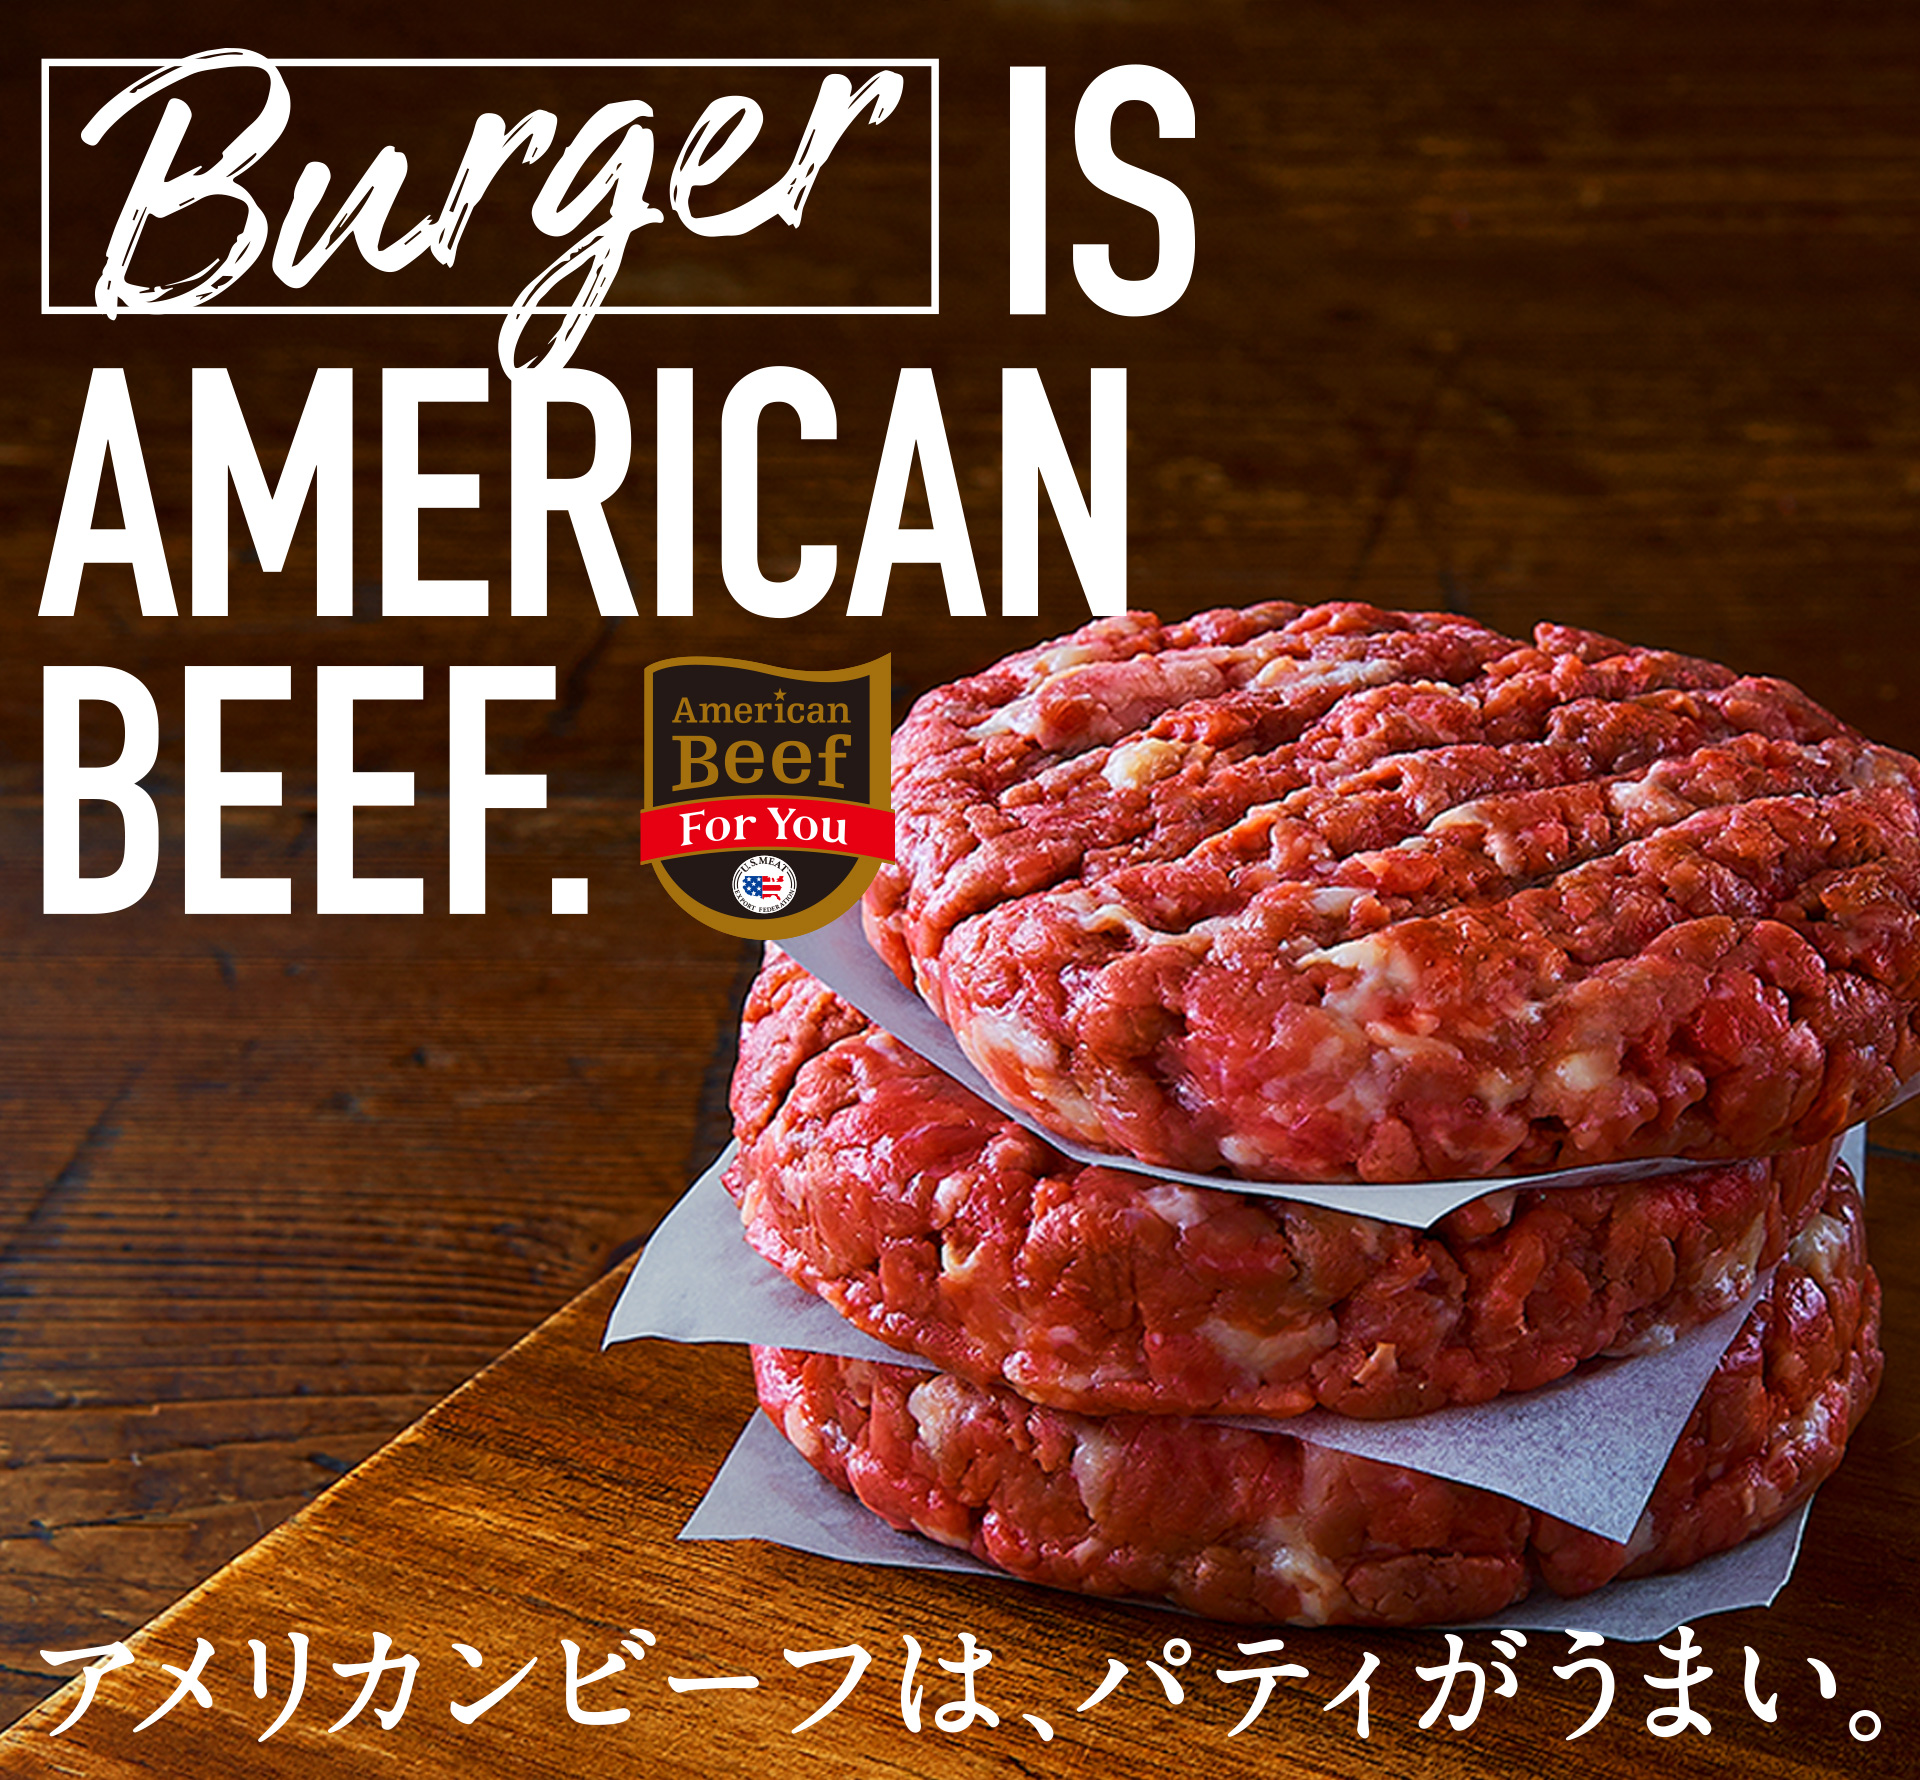 Burger Is American Beef 特集 レシピ アメリカンビーフ アメリカンポーク公式サイト 米国食肉輸出連合会